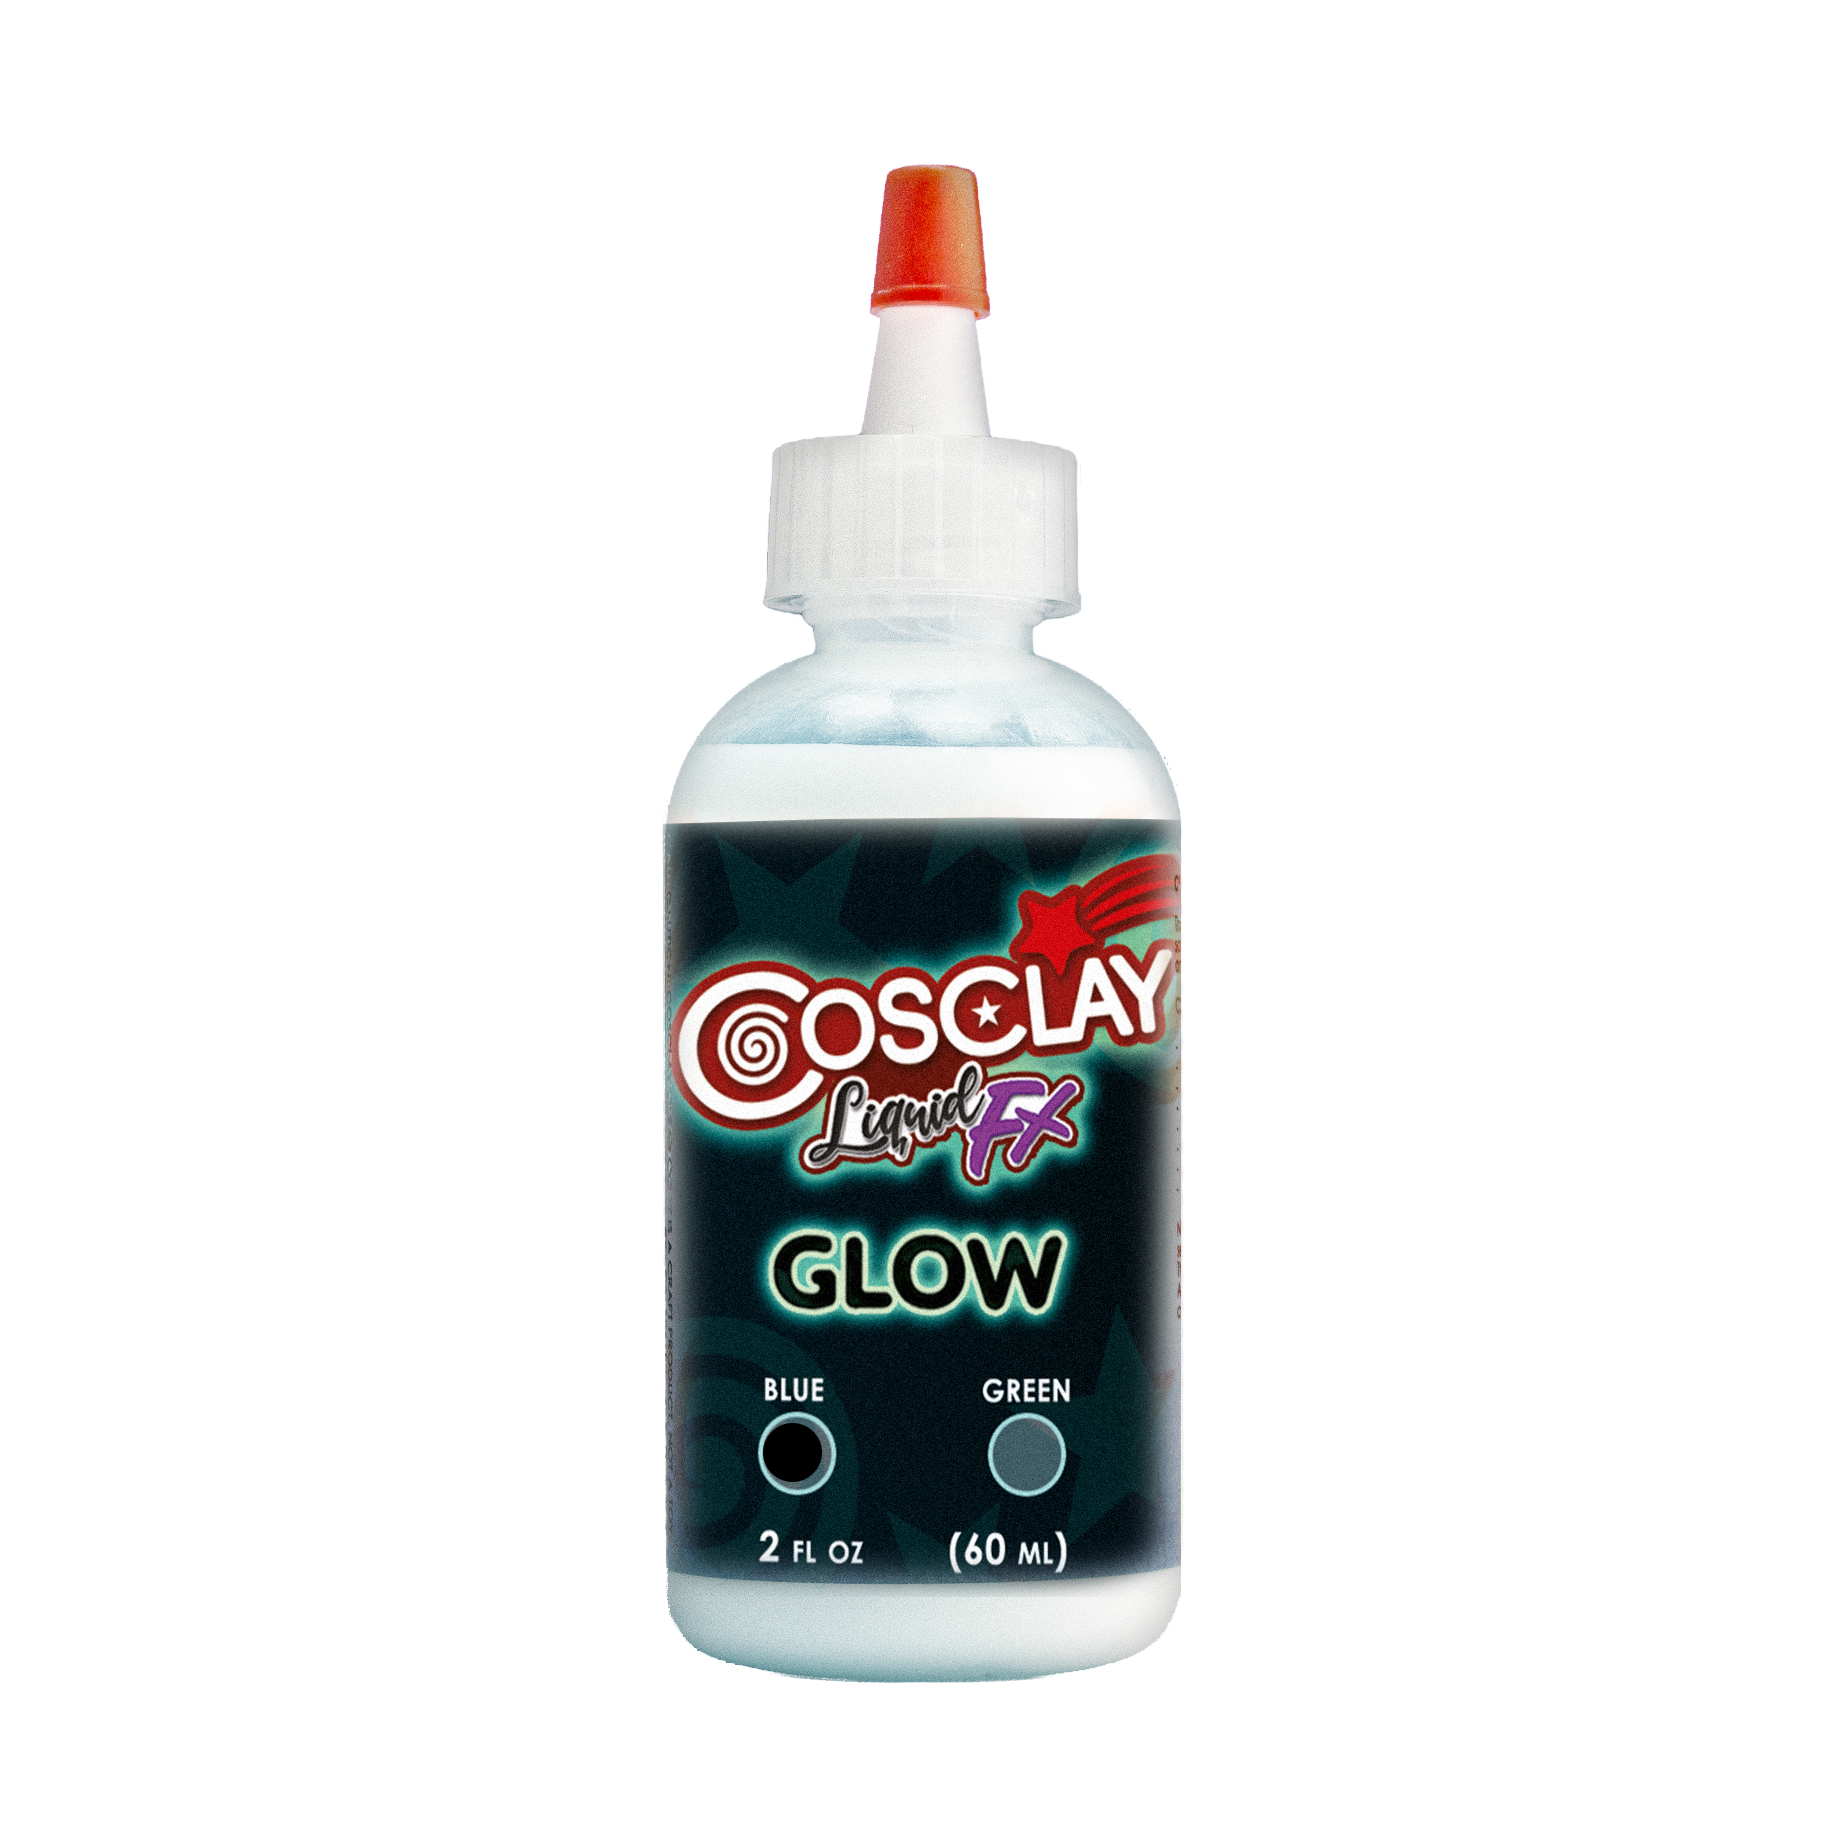 Cosclay ELEMENTS: Translucent — Cosclay